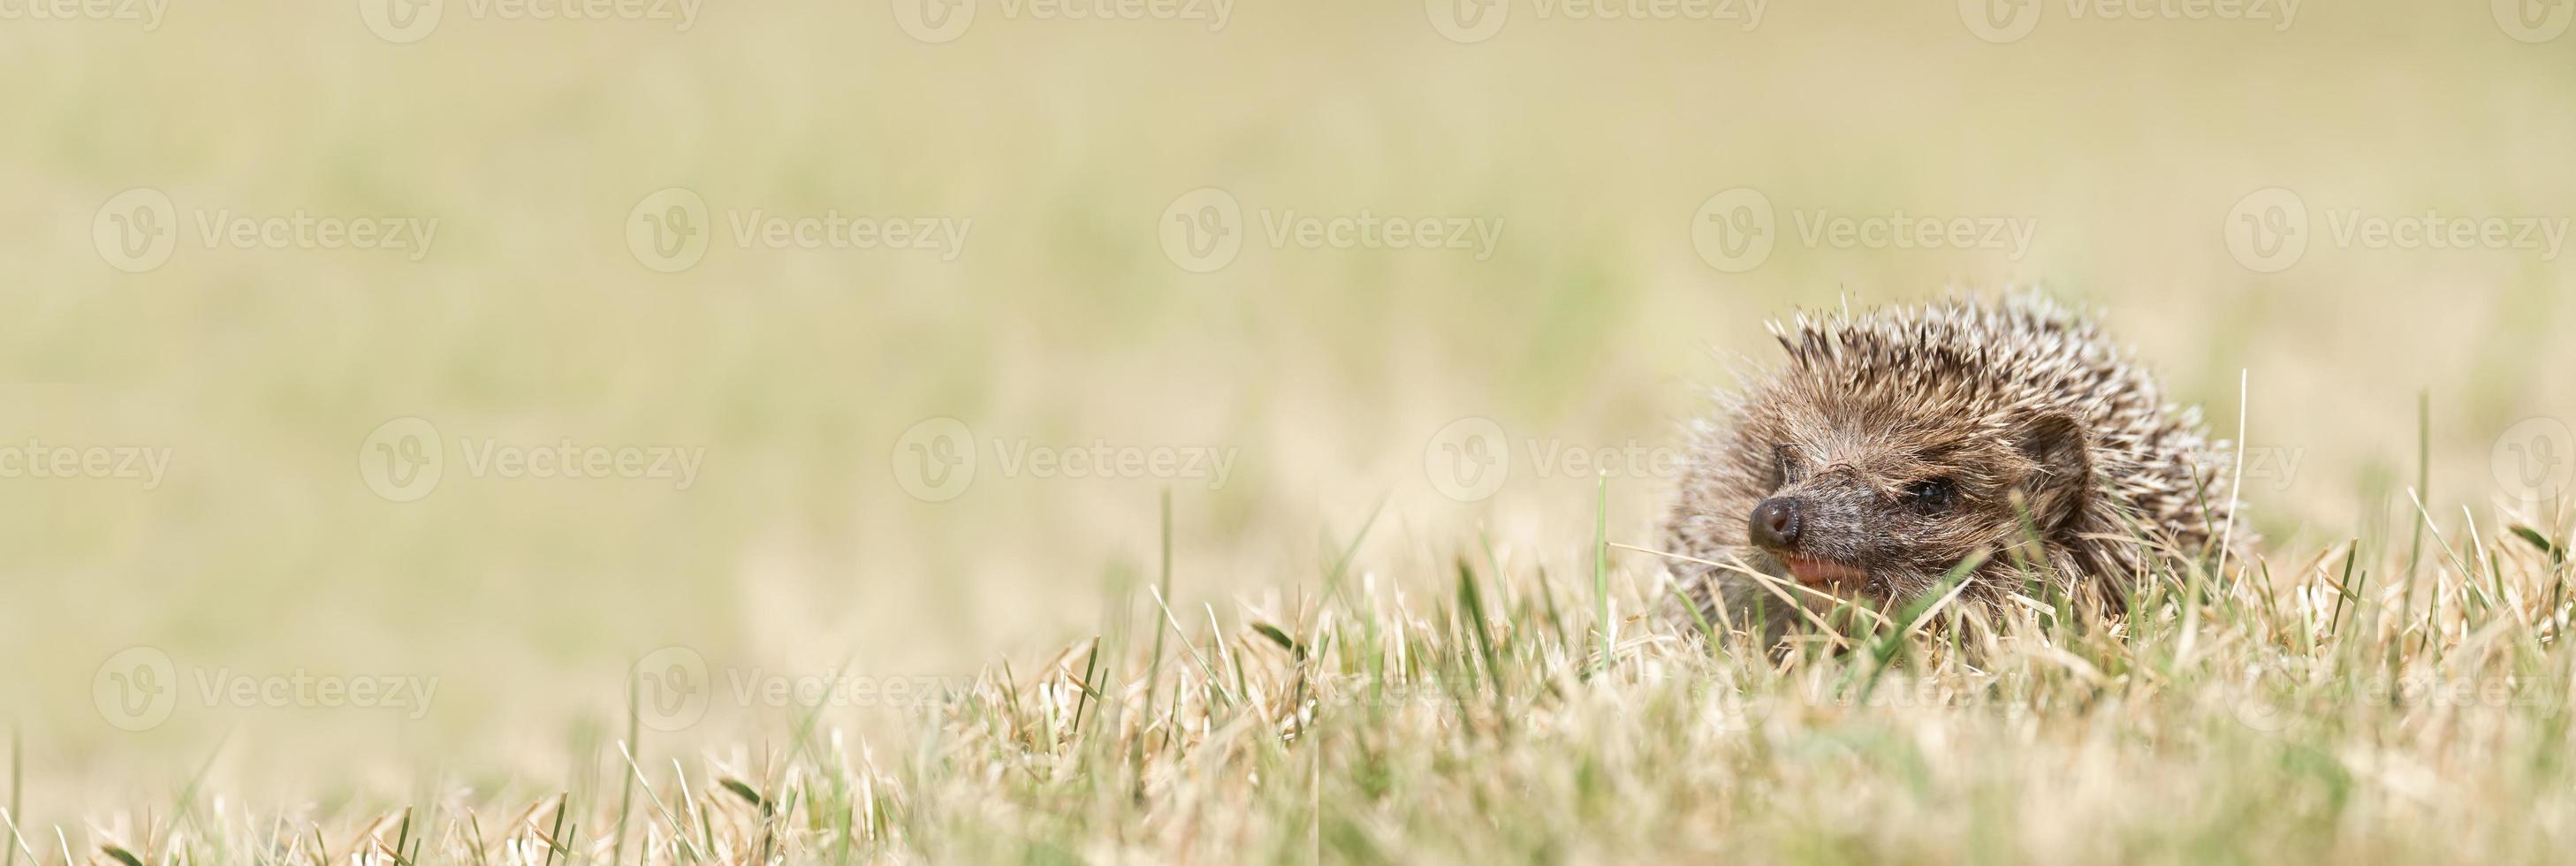 little cute hedgehog in the garden in the green grass photo